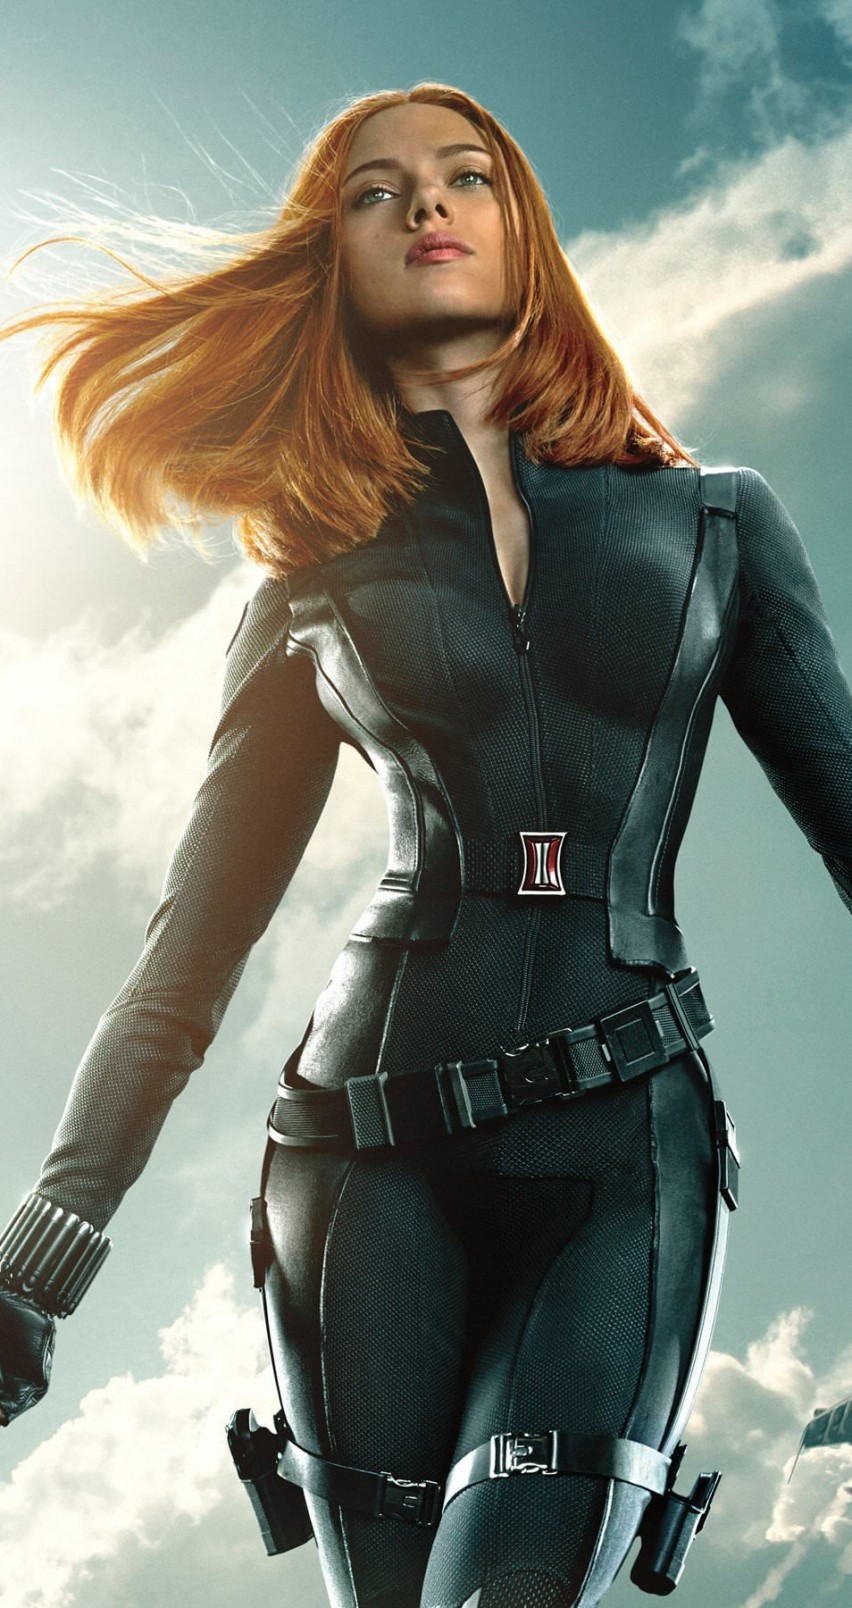 Scarlett Johansson in "Captain America: The Winter Soldier" Wallpaper for Apple iPhone 6 / 6s